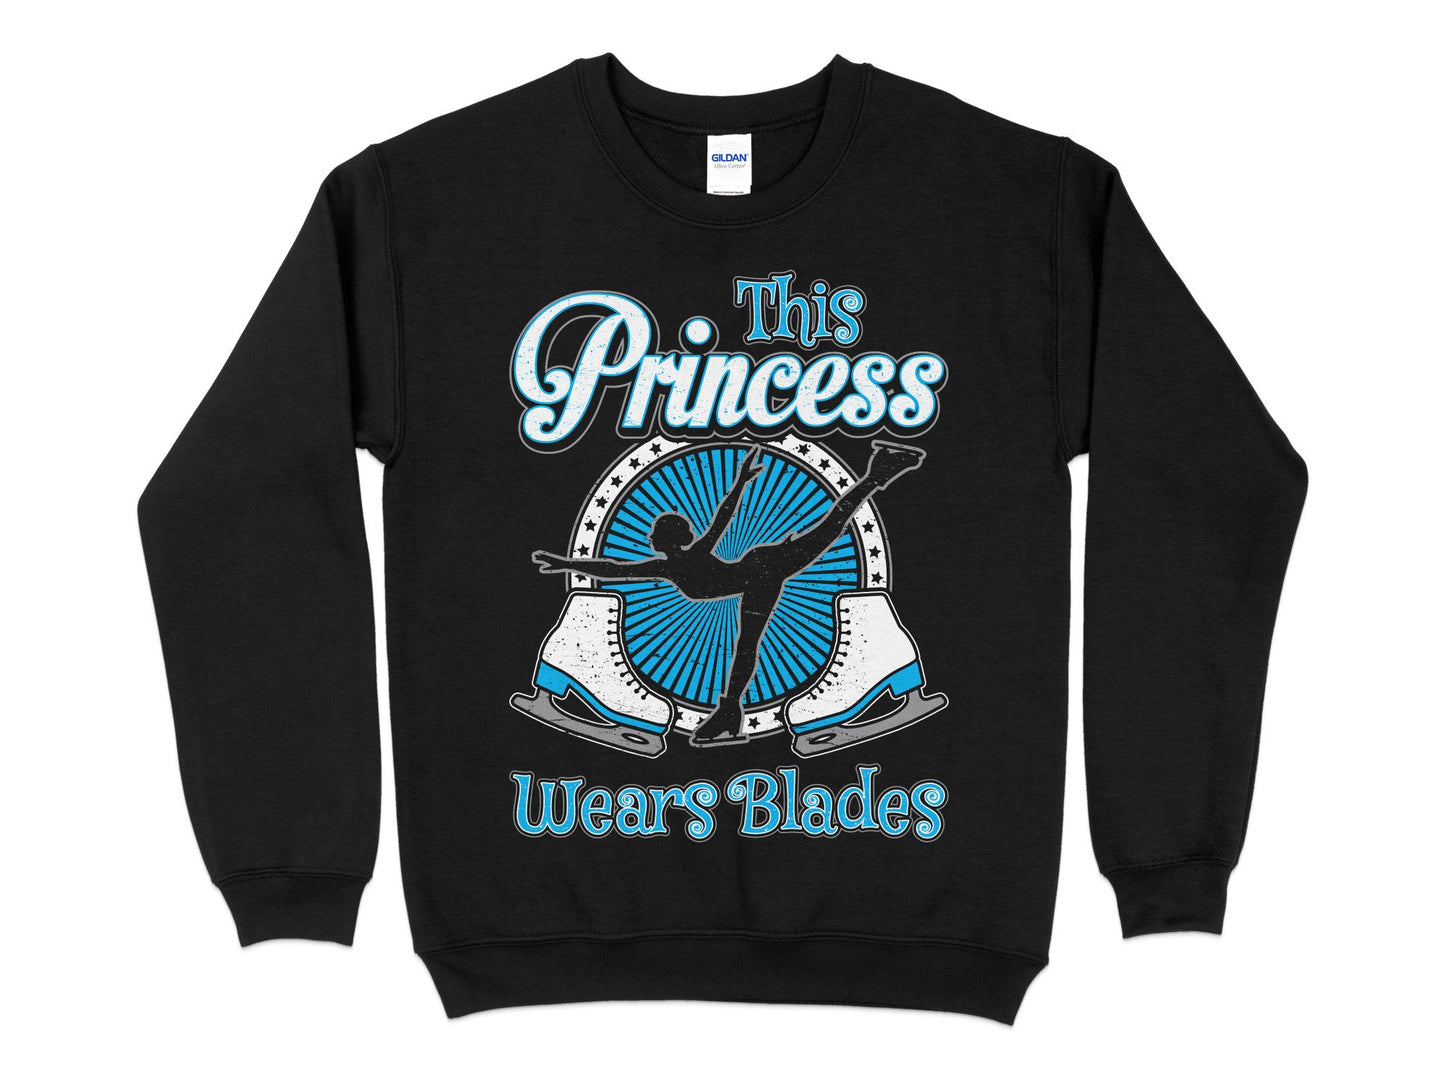 Figure Skating Sweatshirt This Princess Wears Blades, black